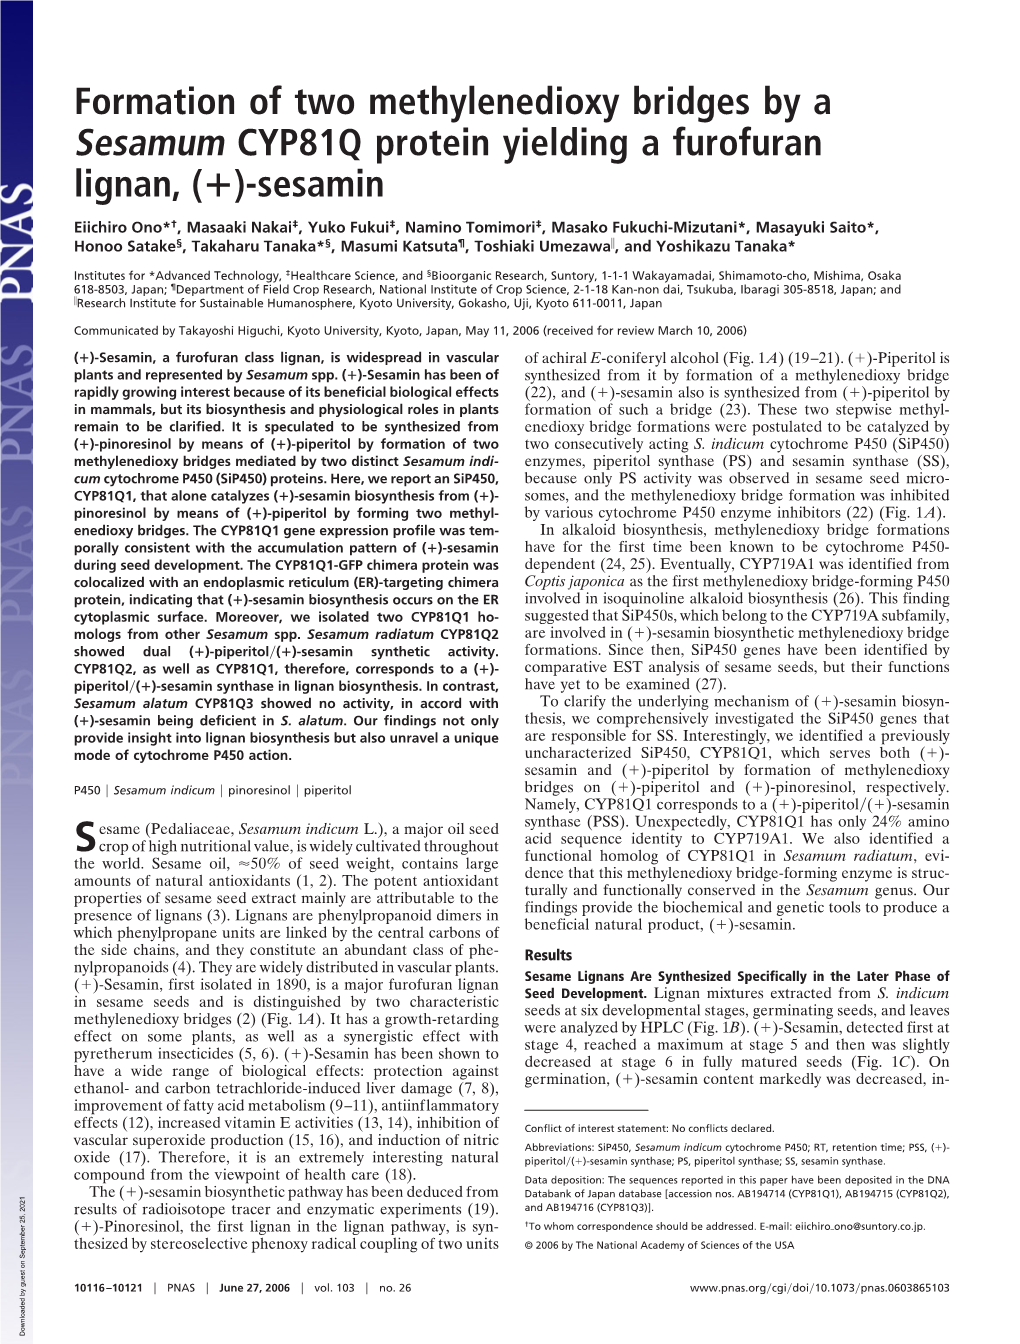 Formation of Two Methylenedioxy Bridges by a Sesamum CYP81Q Protein Yielding a Furofuran Lignan, (+)-Sesamin